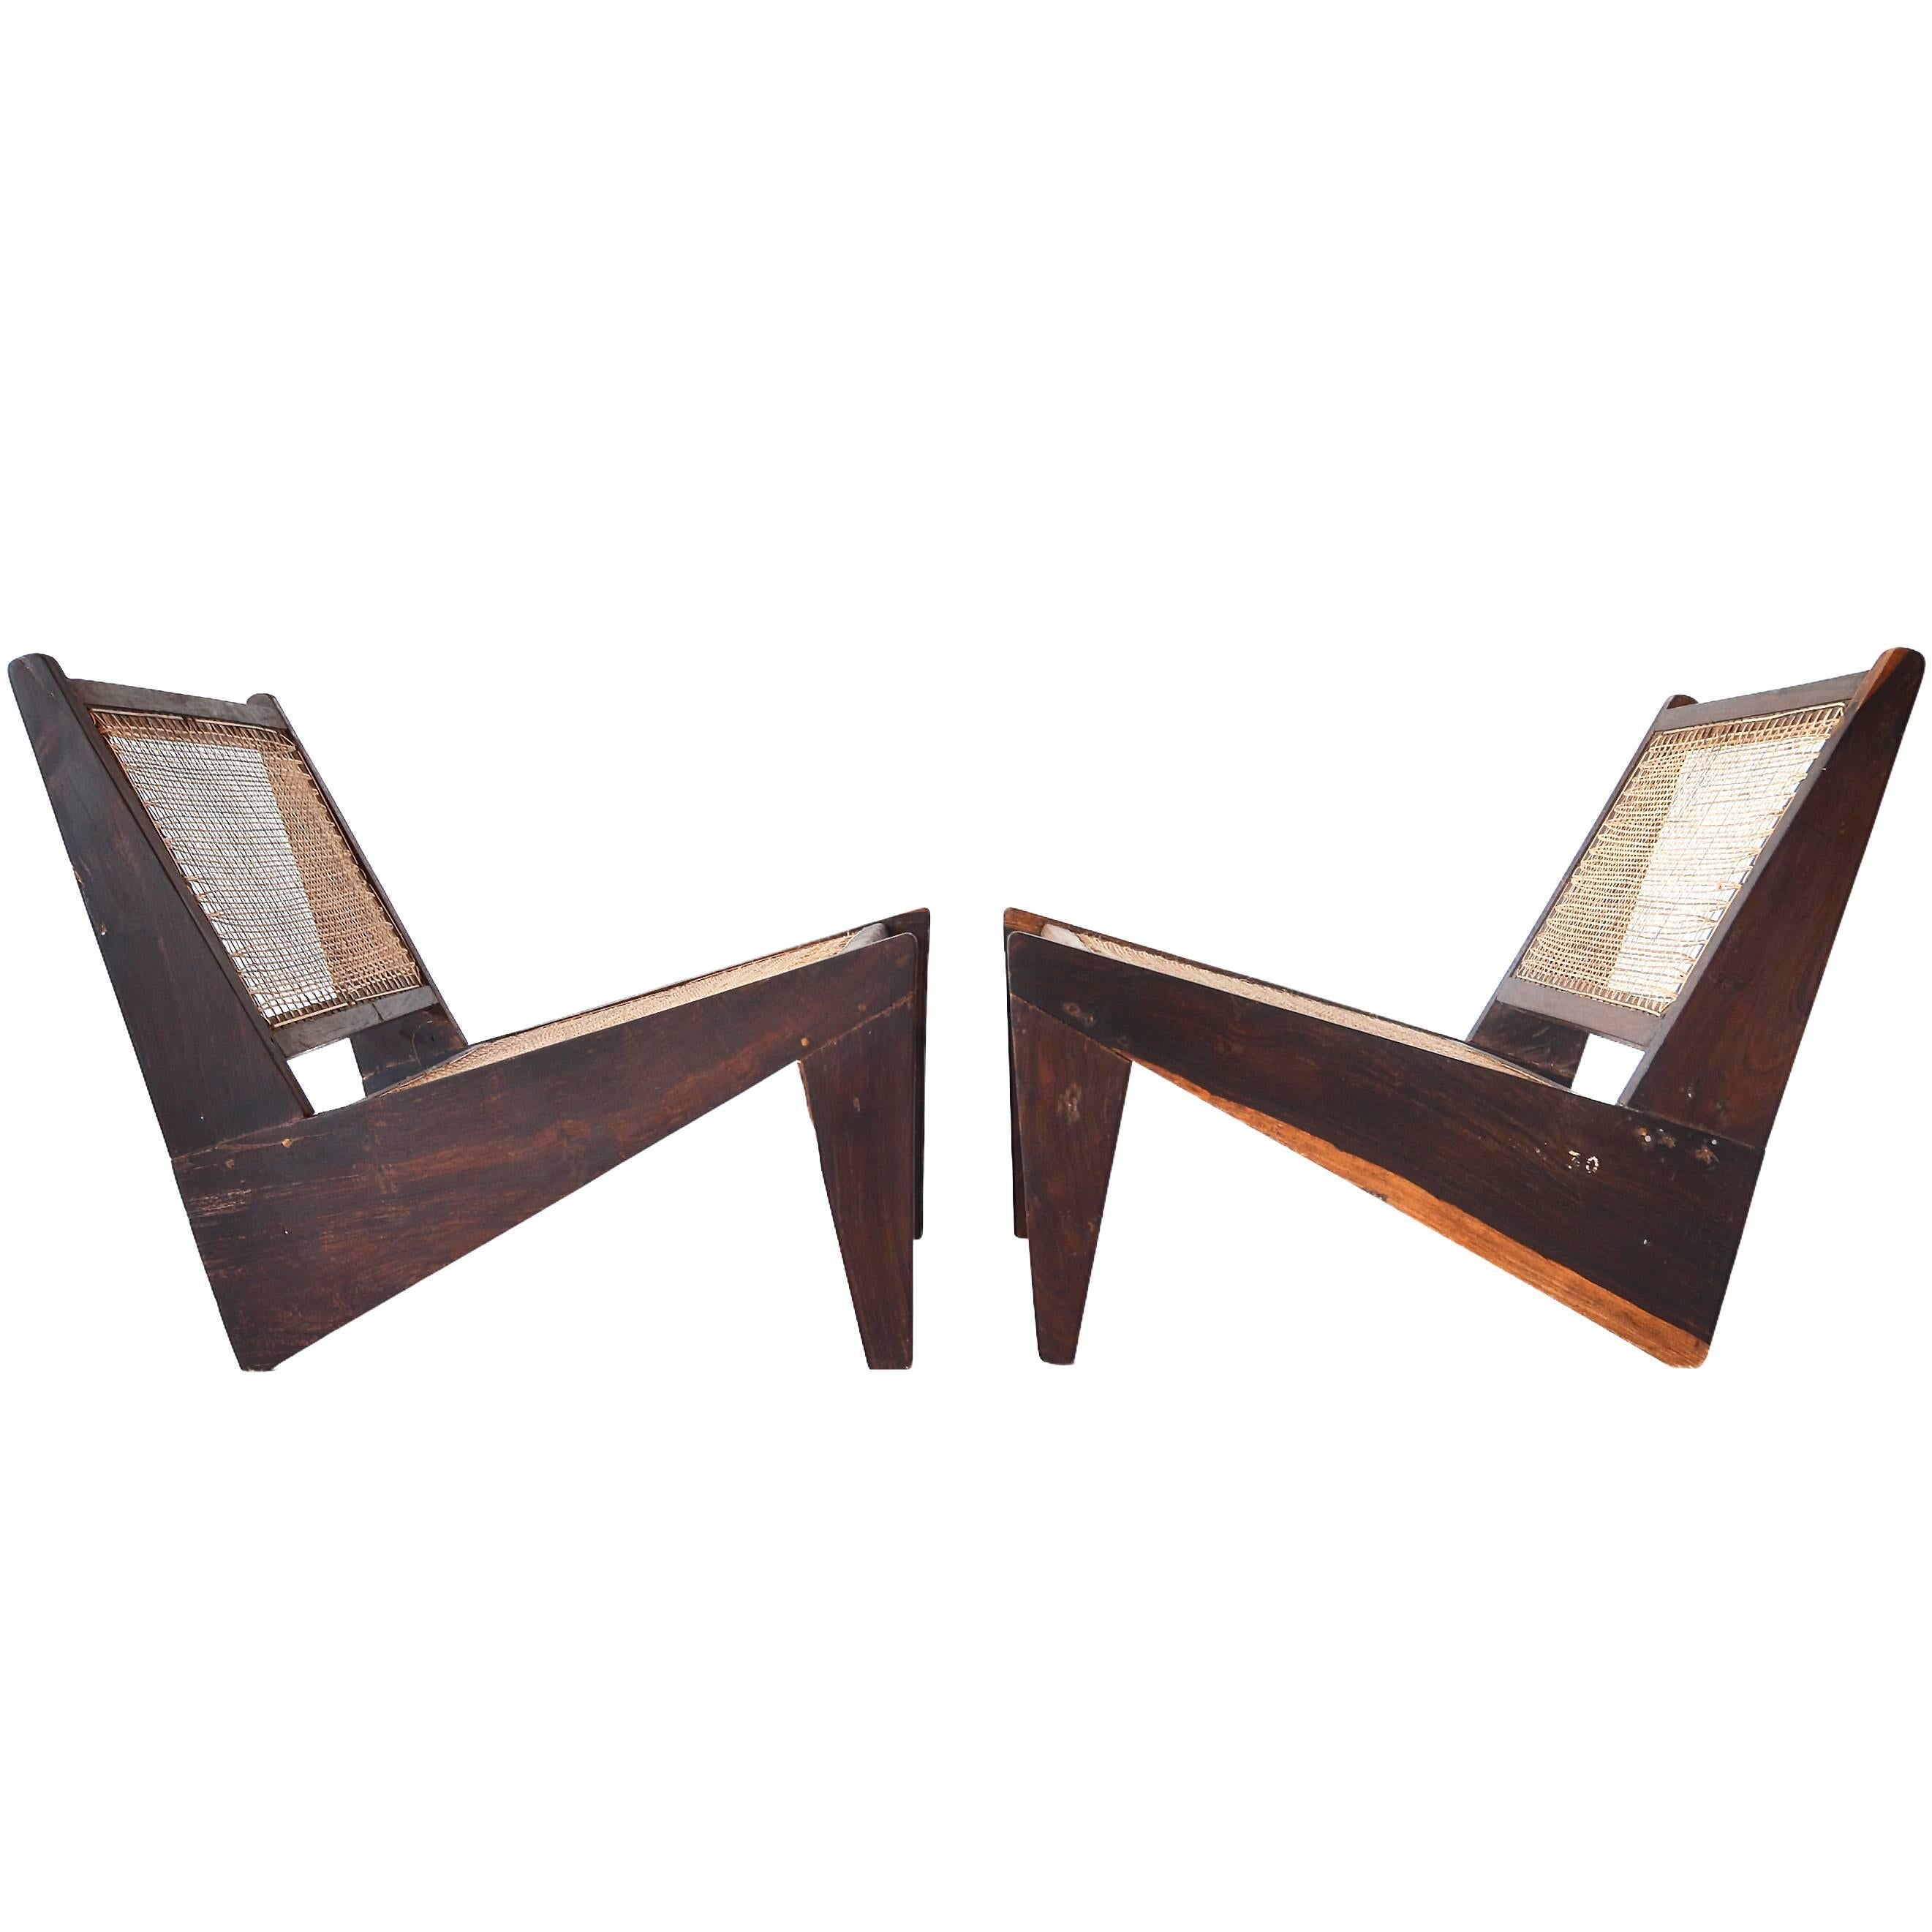 Rare Pair of Pierre Jeanneret Kangaroo Low Chairs in Sissoo Rosewood